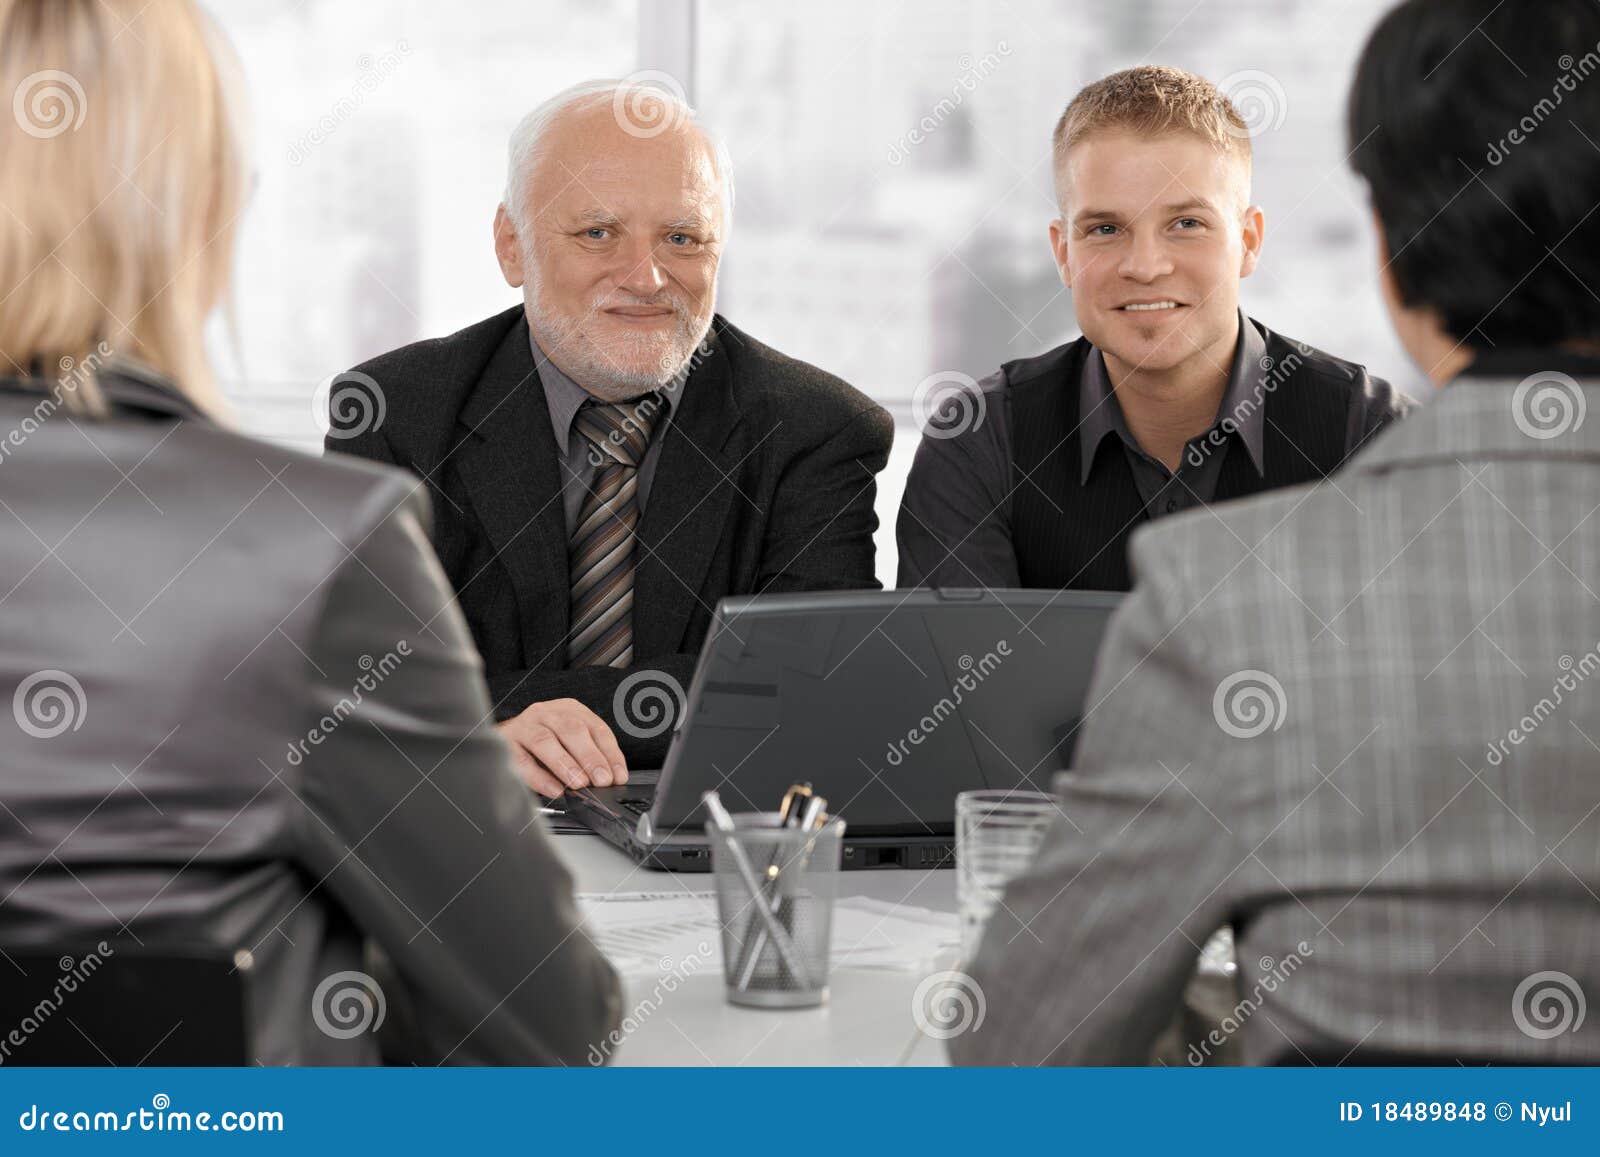 businessmen meeting with businesswomen